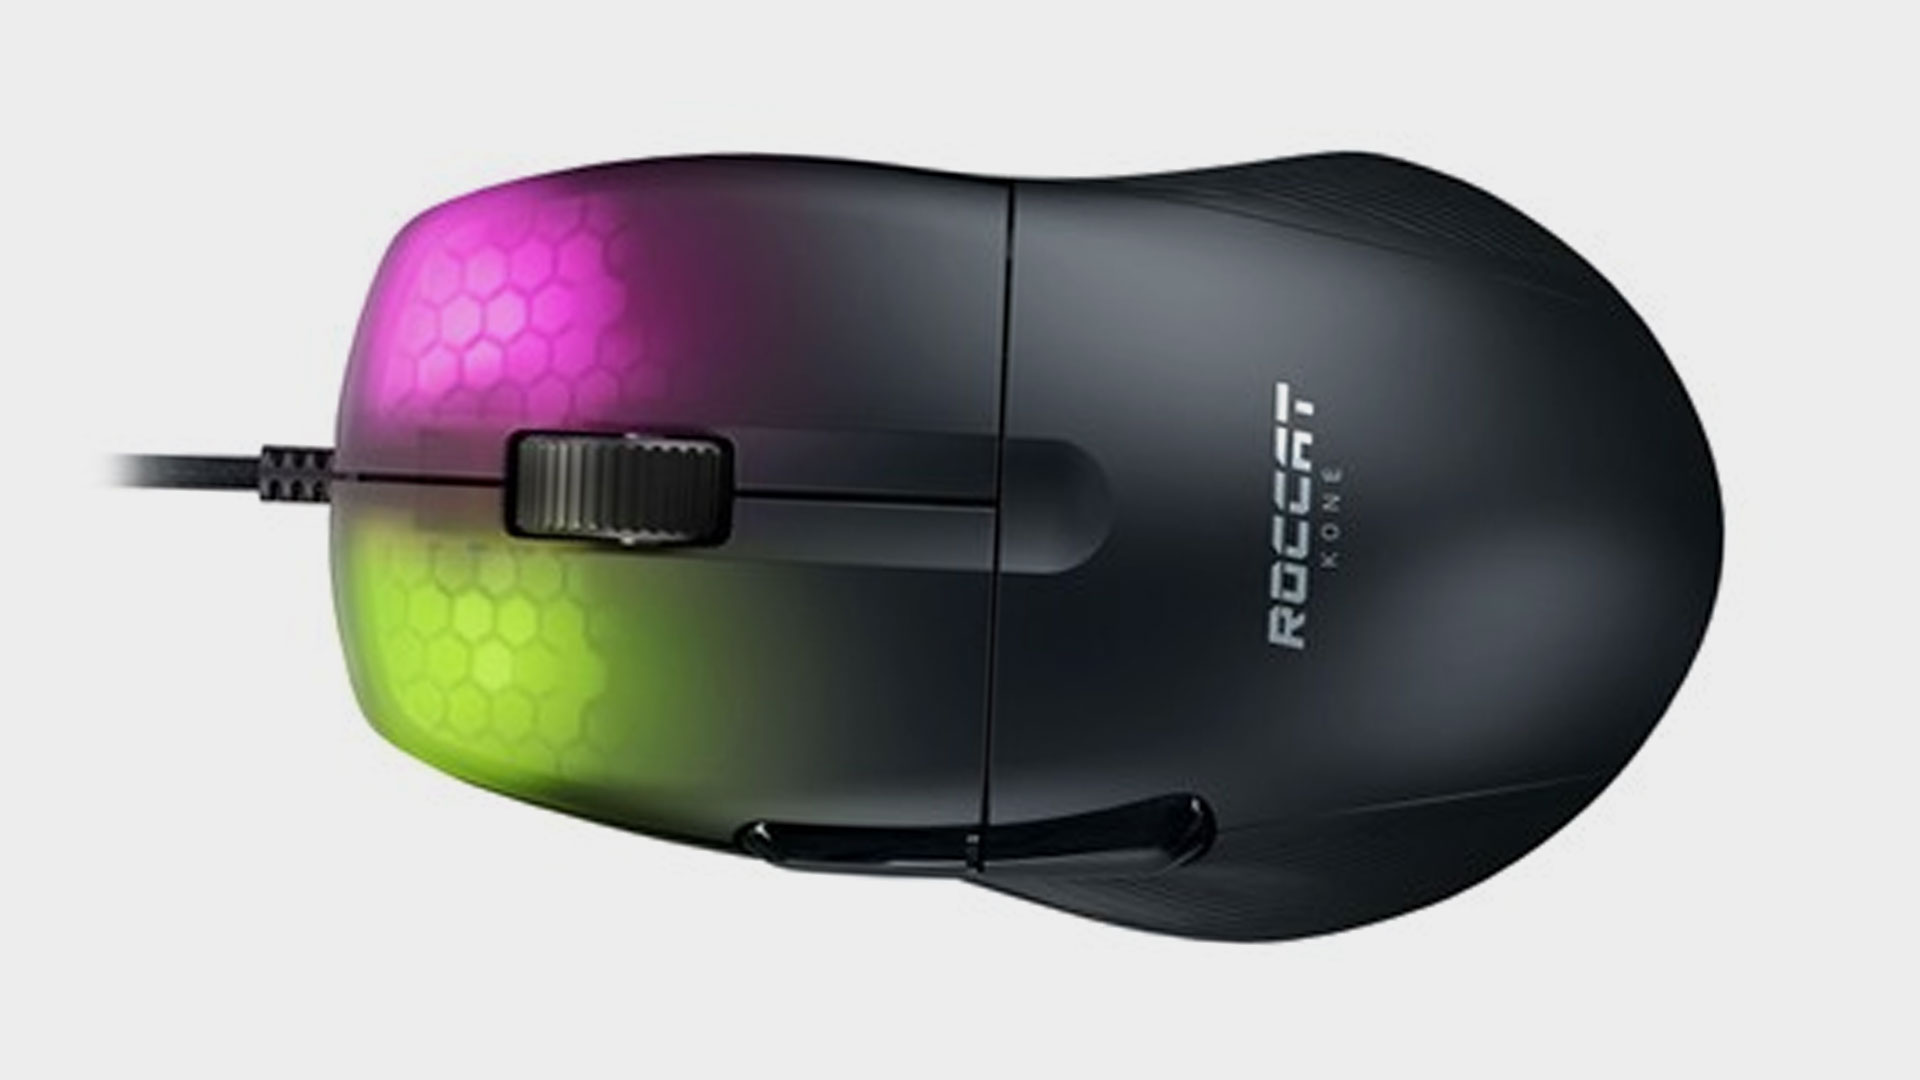 Roccat Kone Pro 超軽量有線ゲーミング マウス